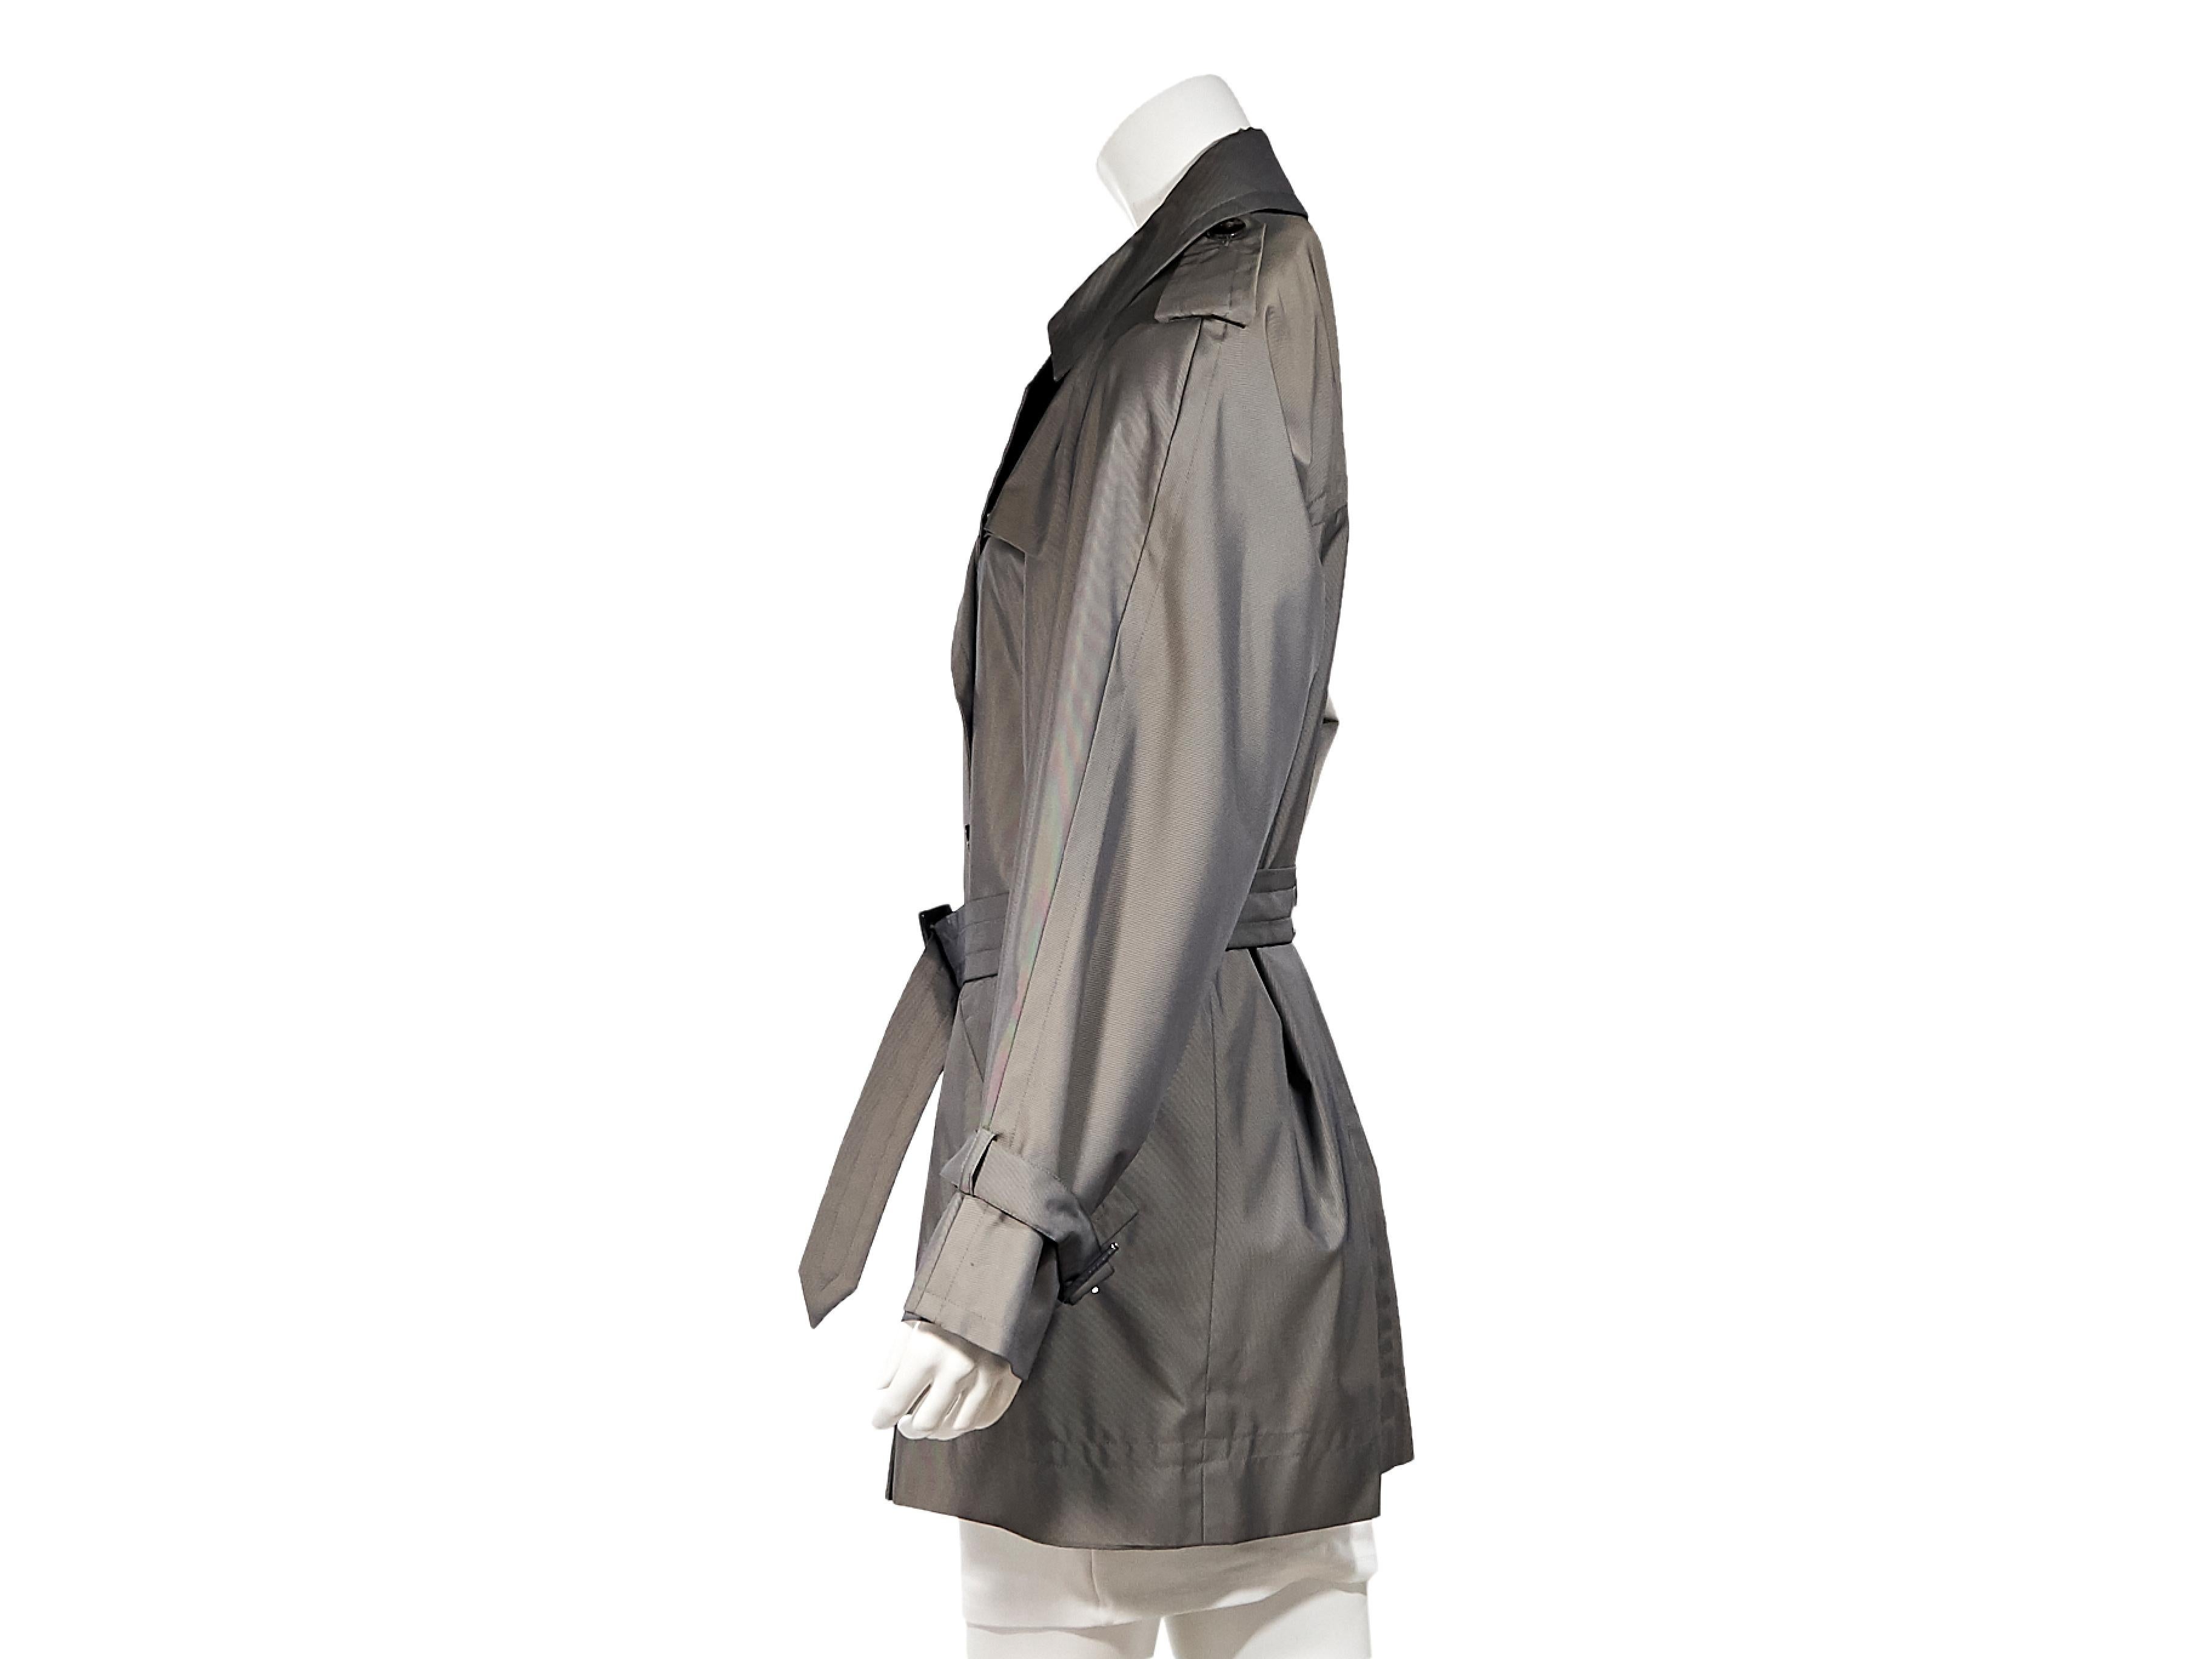 Product details:  Vintage grey trench coat by Yves Saint Laurent Rive Gauche.  Shoulder epaulettes.  Notched lapel.  Double-breasted button-front closure.  Adjustable belted waist.  Waist slide pockets.  Label size FR 42.  34